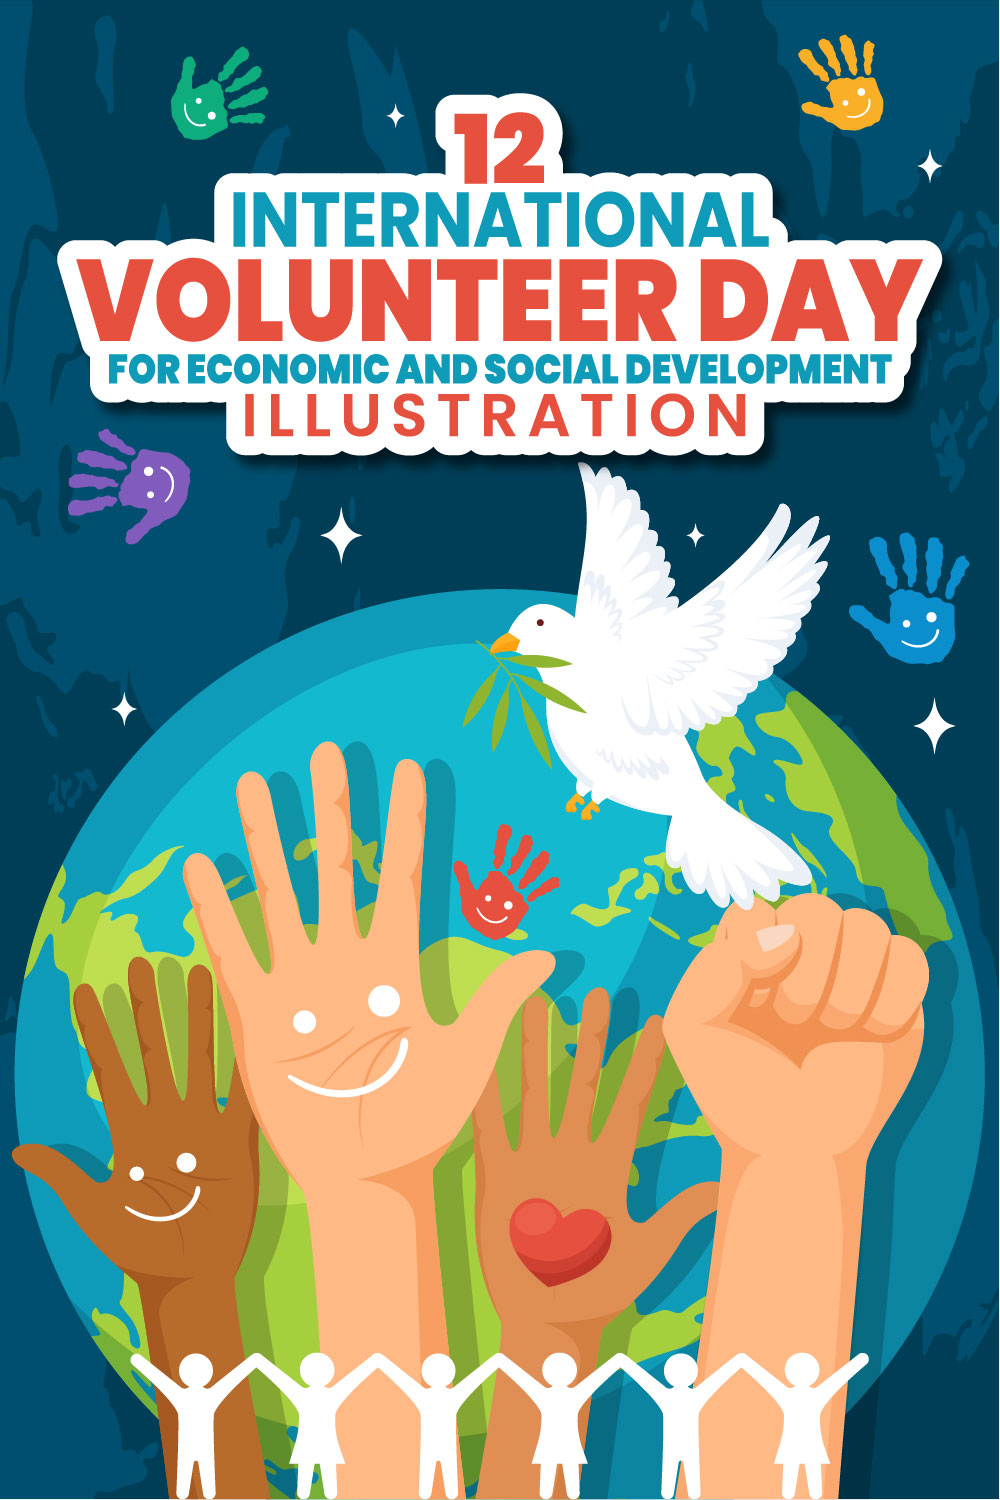 12 International Volunteer Day Illustration pinterest preview image.